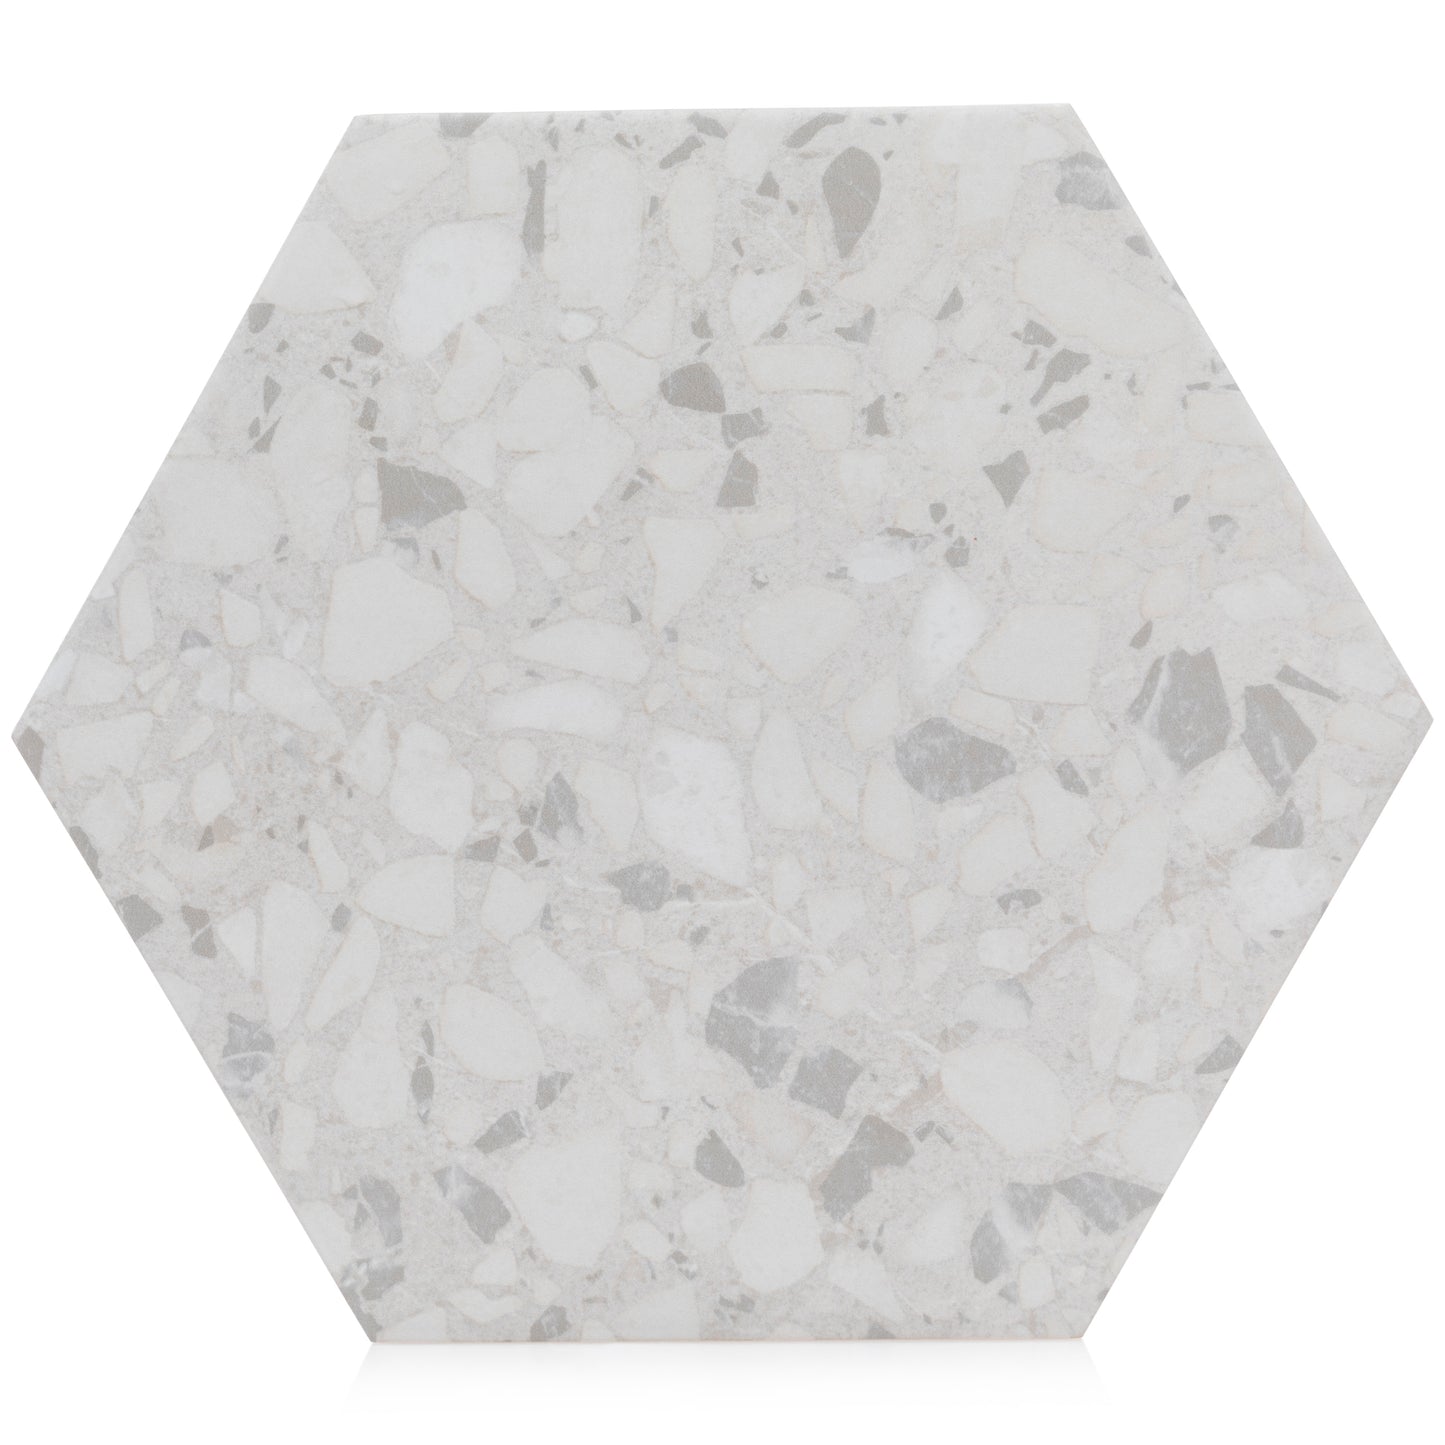 9x10 Hexagon White Terrazzo porcelain tile - Industry Tile